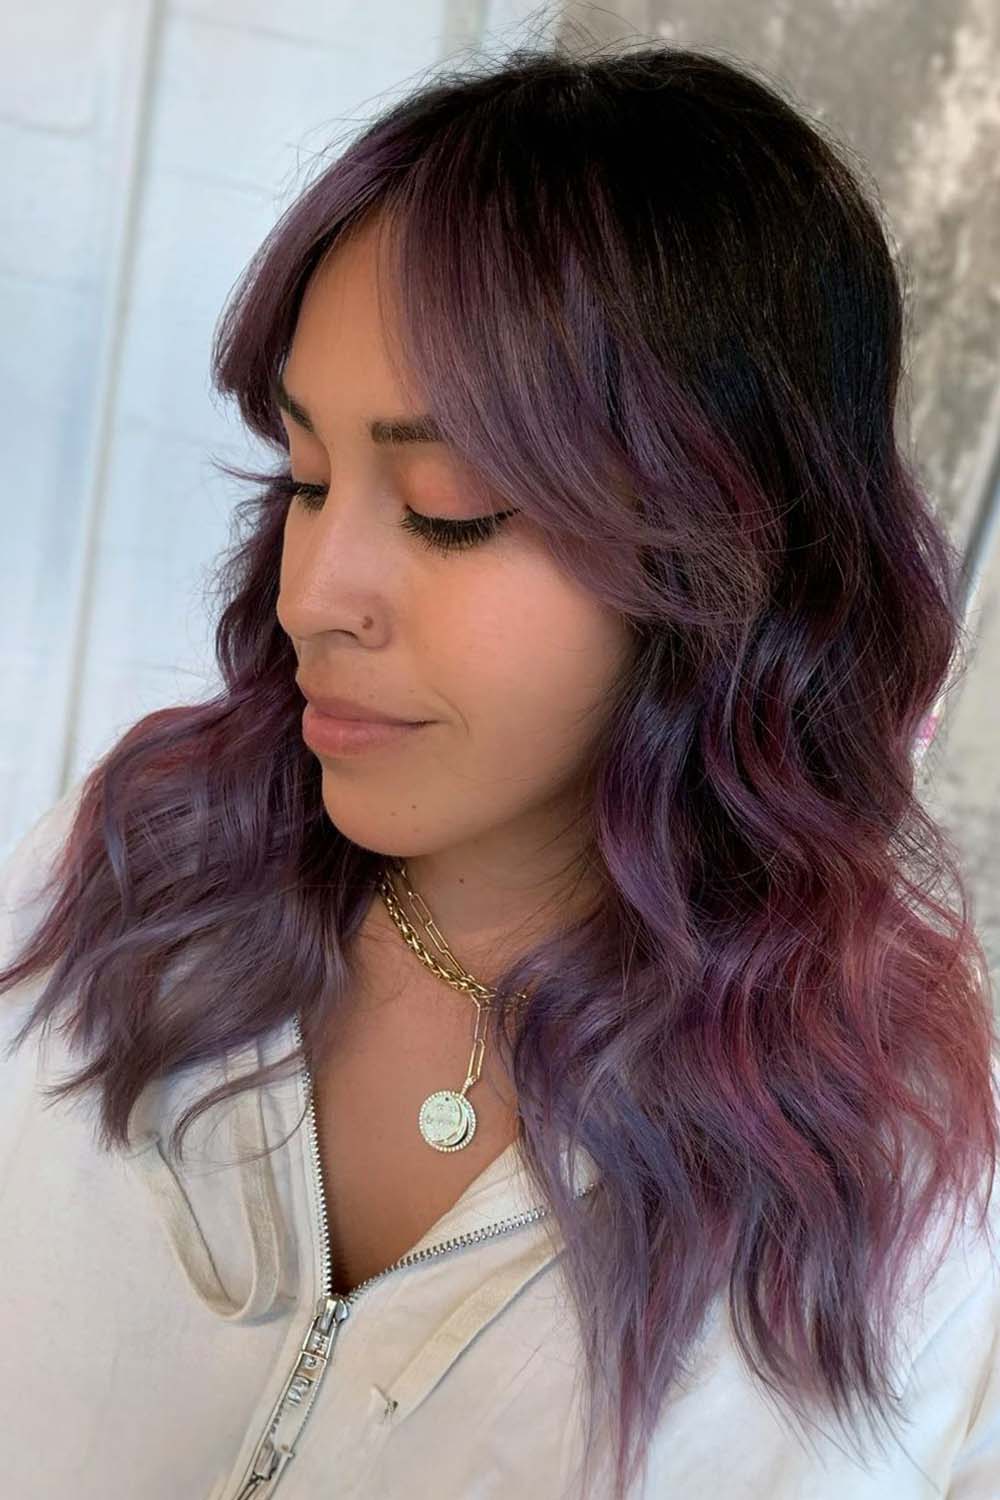 25 Trendy Lilac Hair Shades